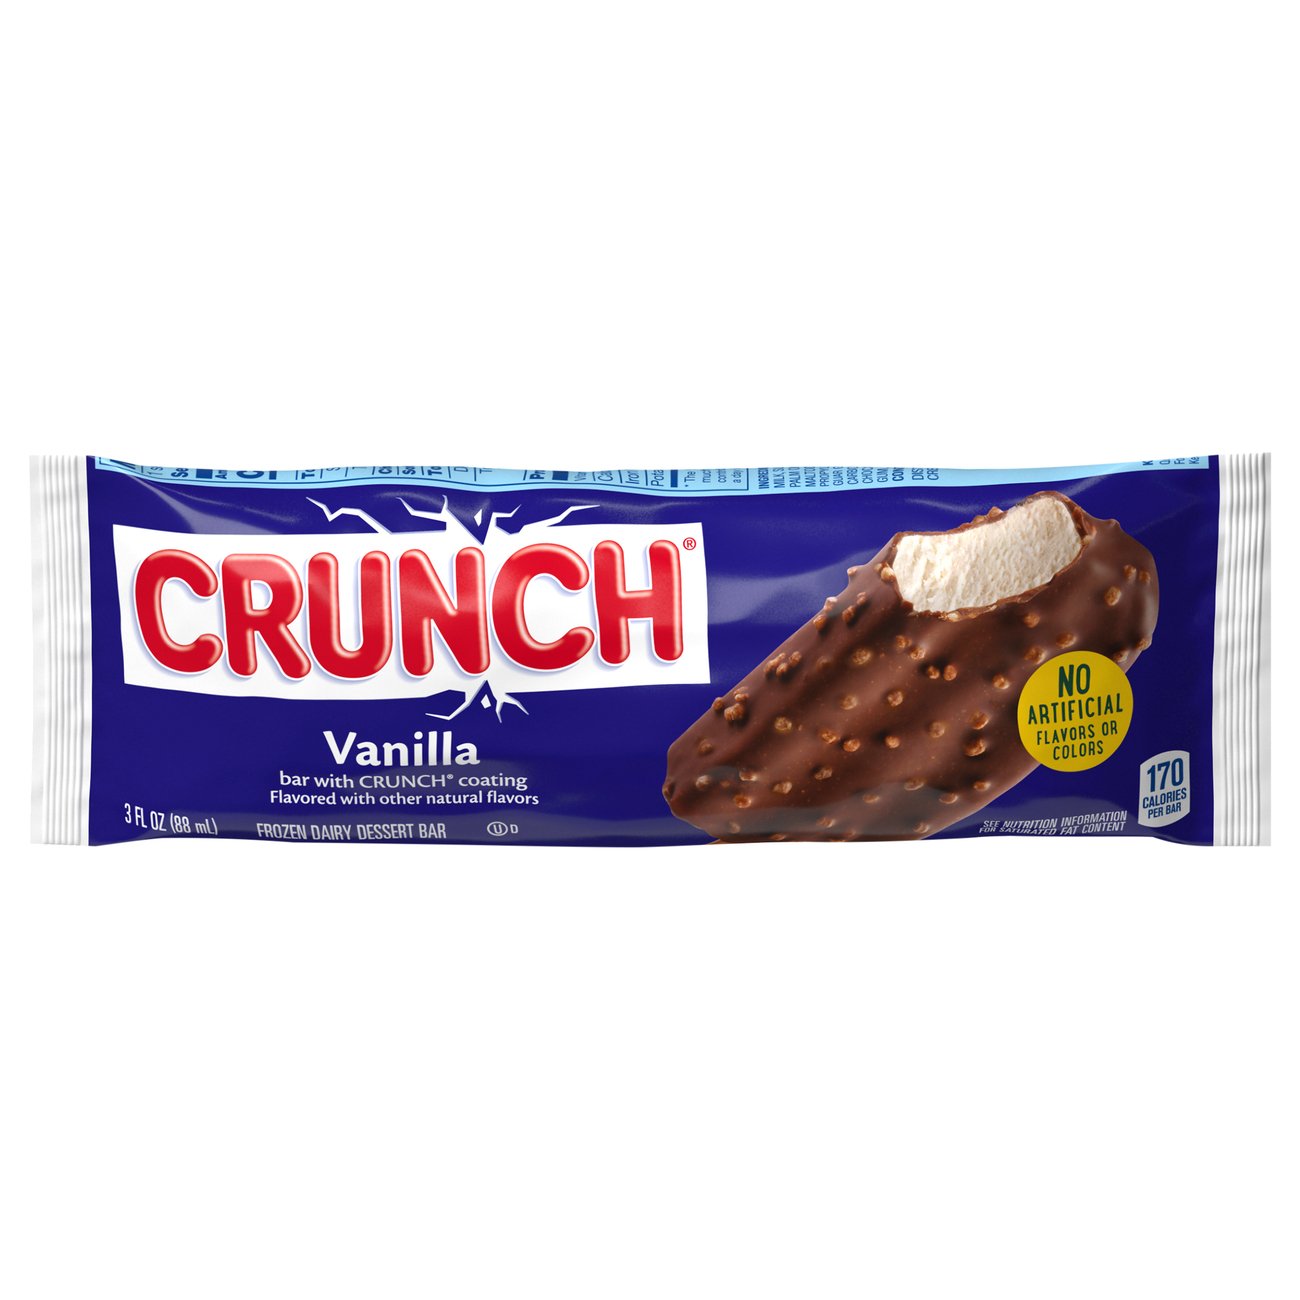 Nestle Crunch Ice Cream Bar